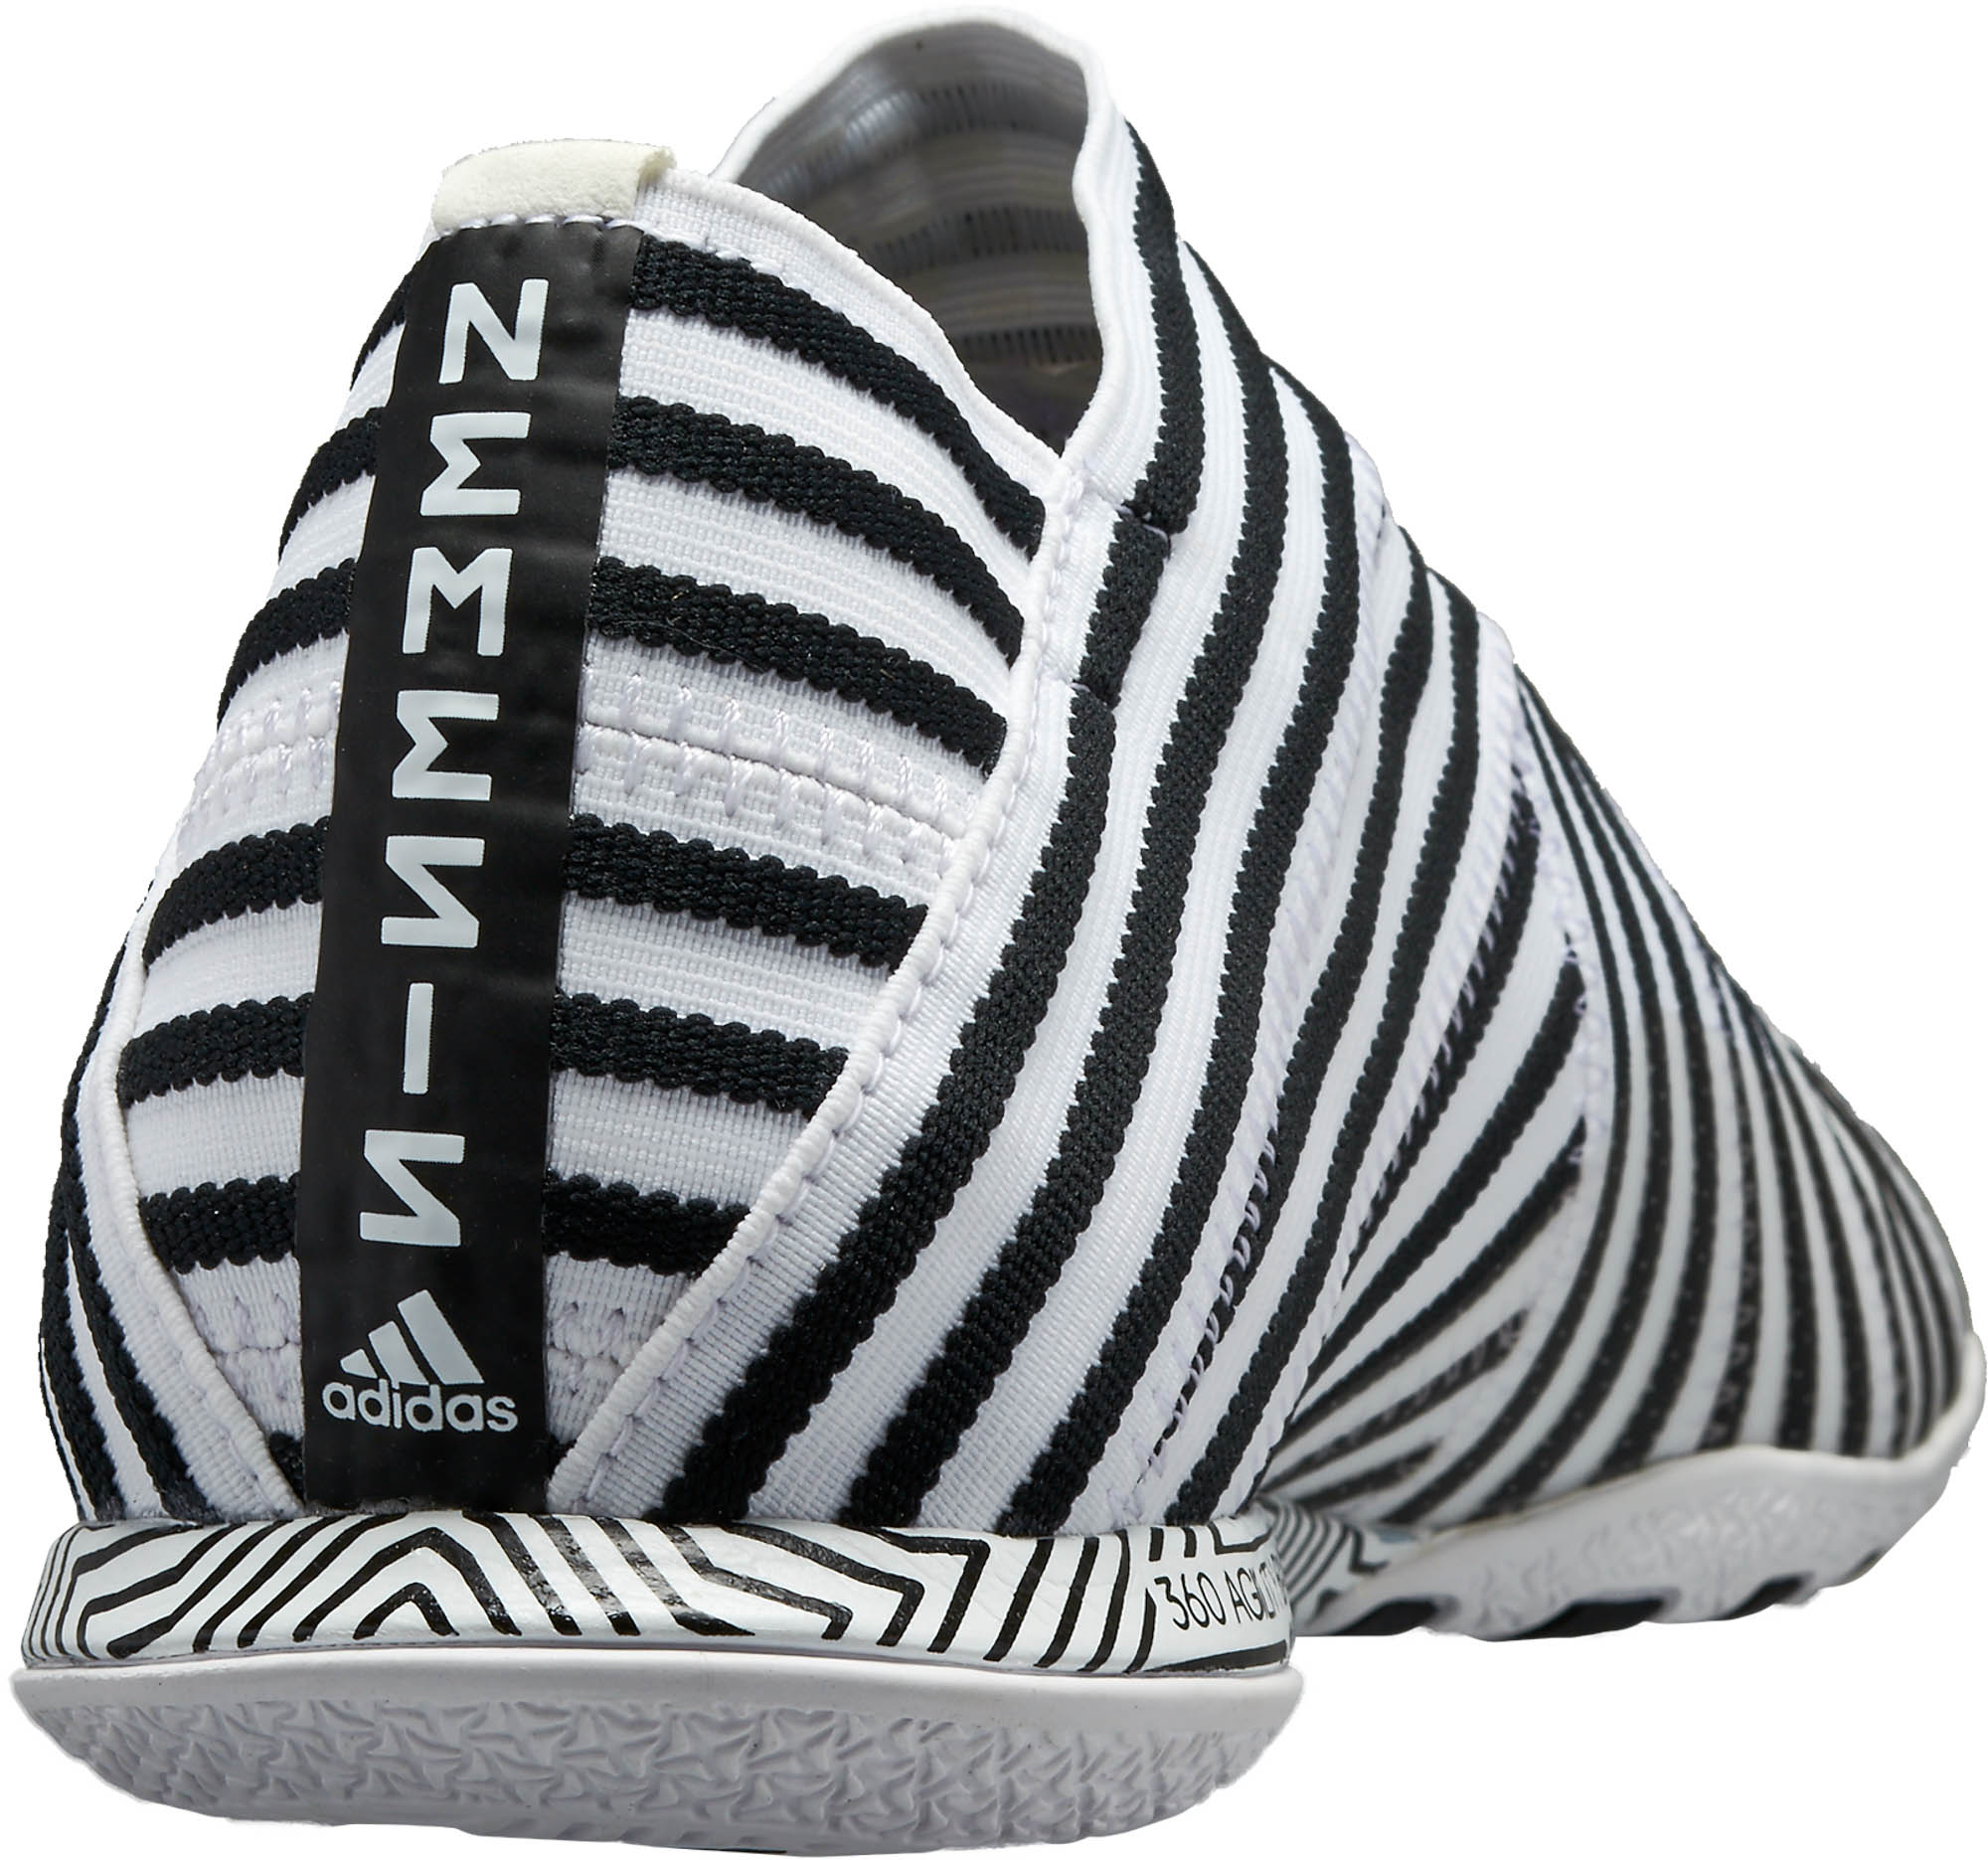 Monarch Jonglere Baby adidas Nemeziz Tango 17+ 360Agility Soccer Shoes - White & Black - Soccer  Master